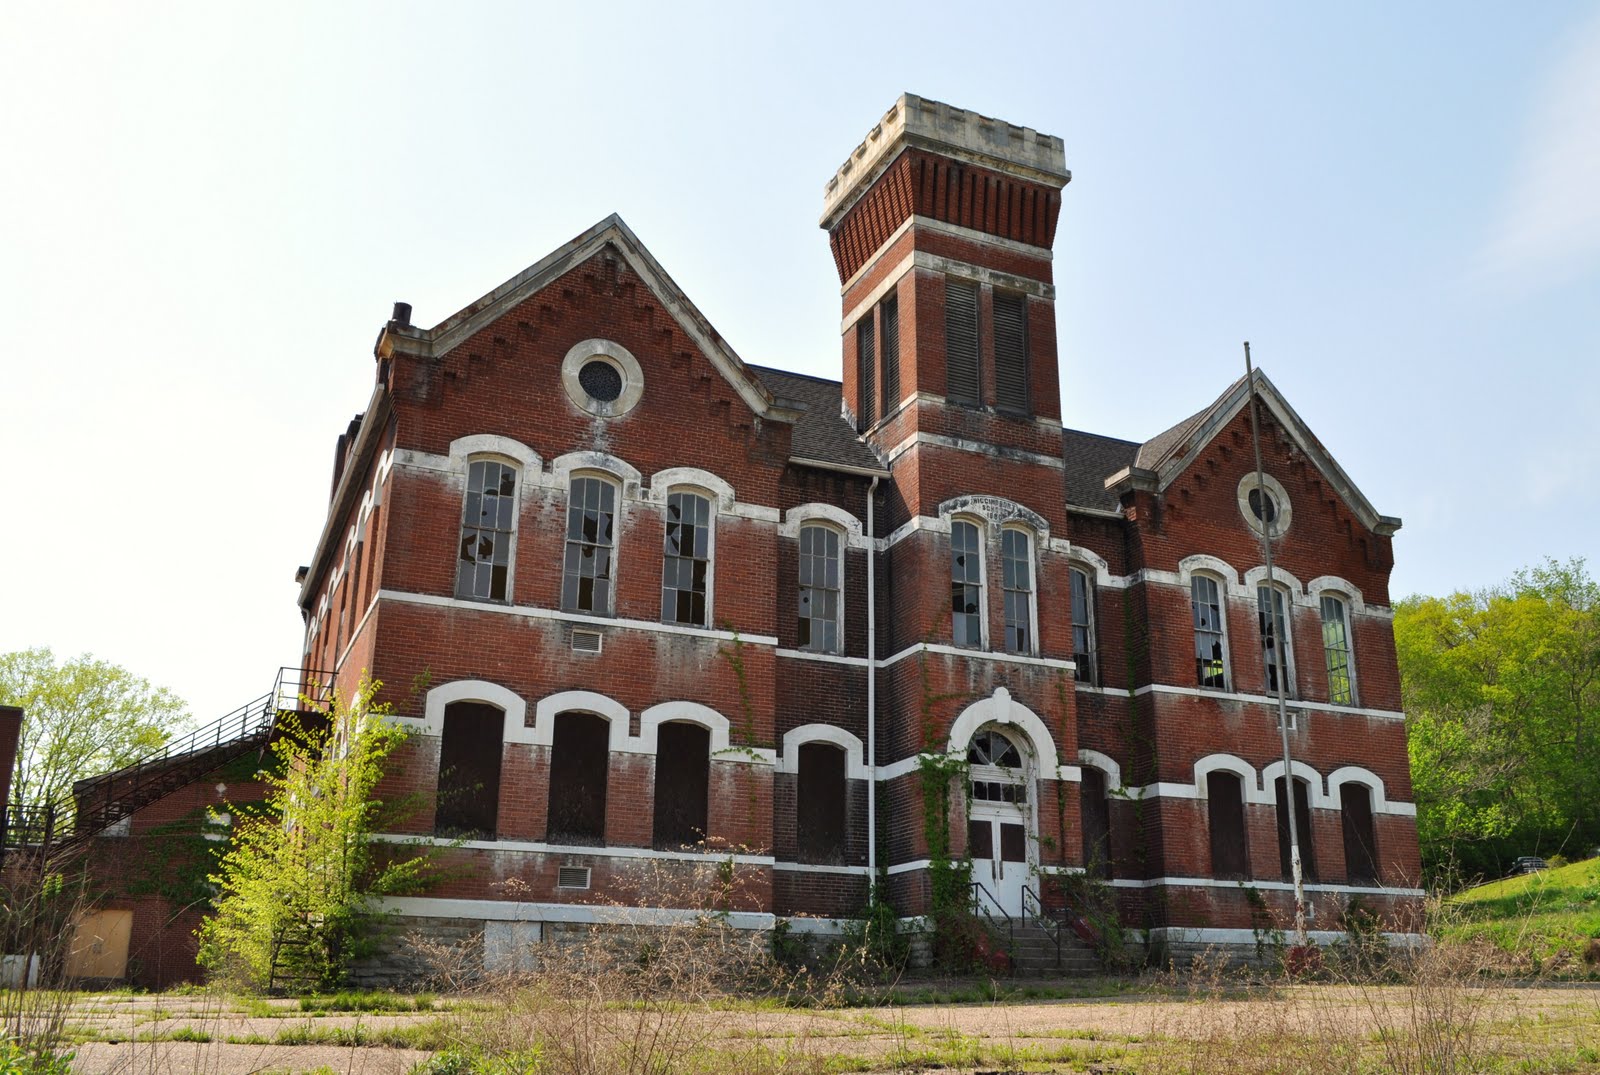 The Higginsport School paranormal